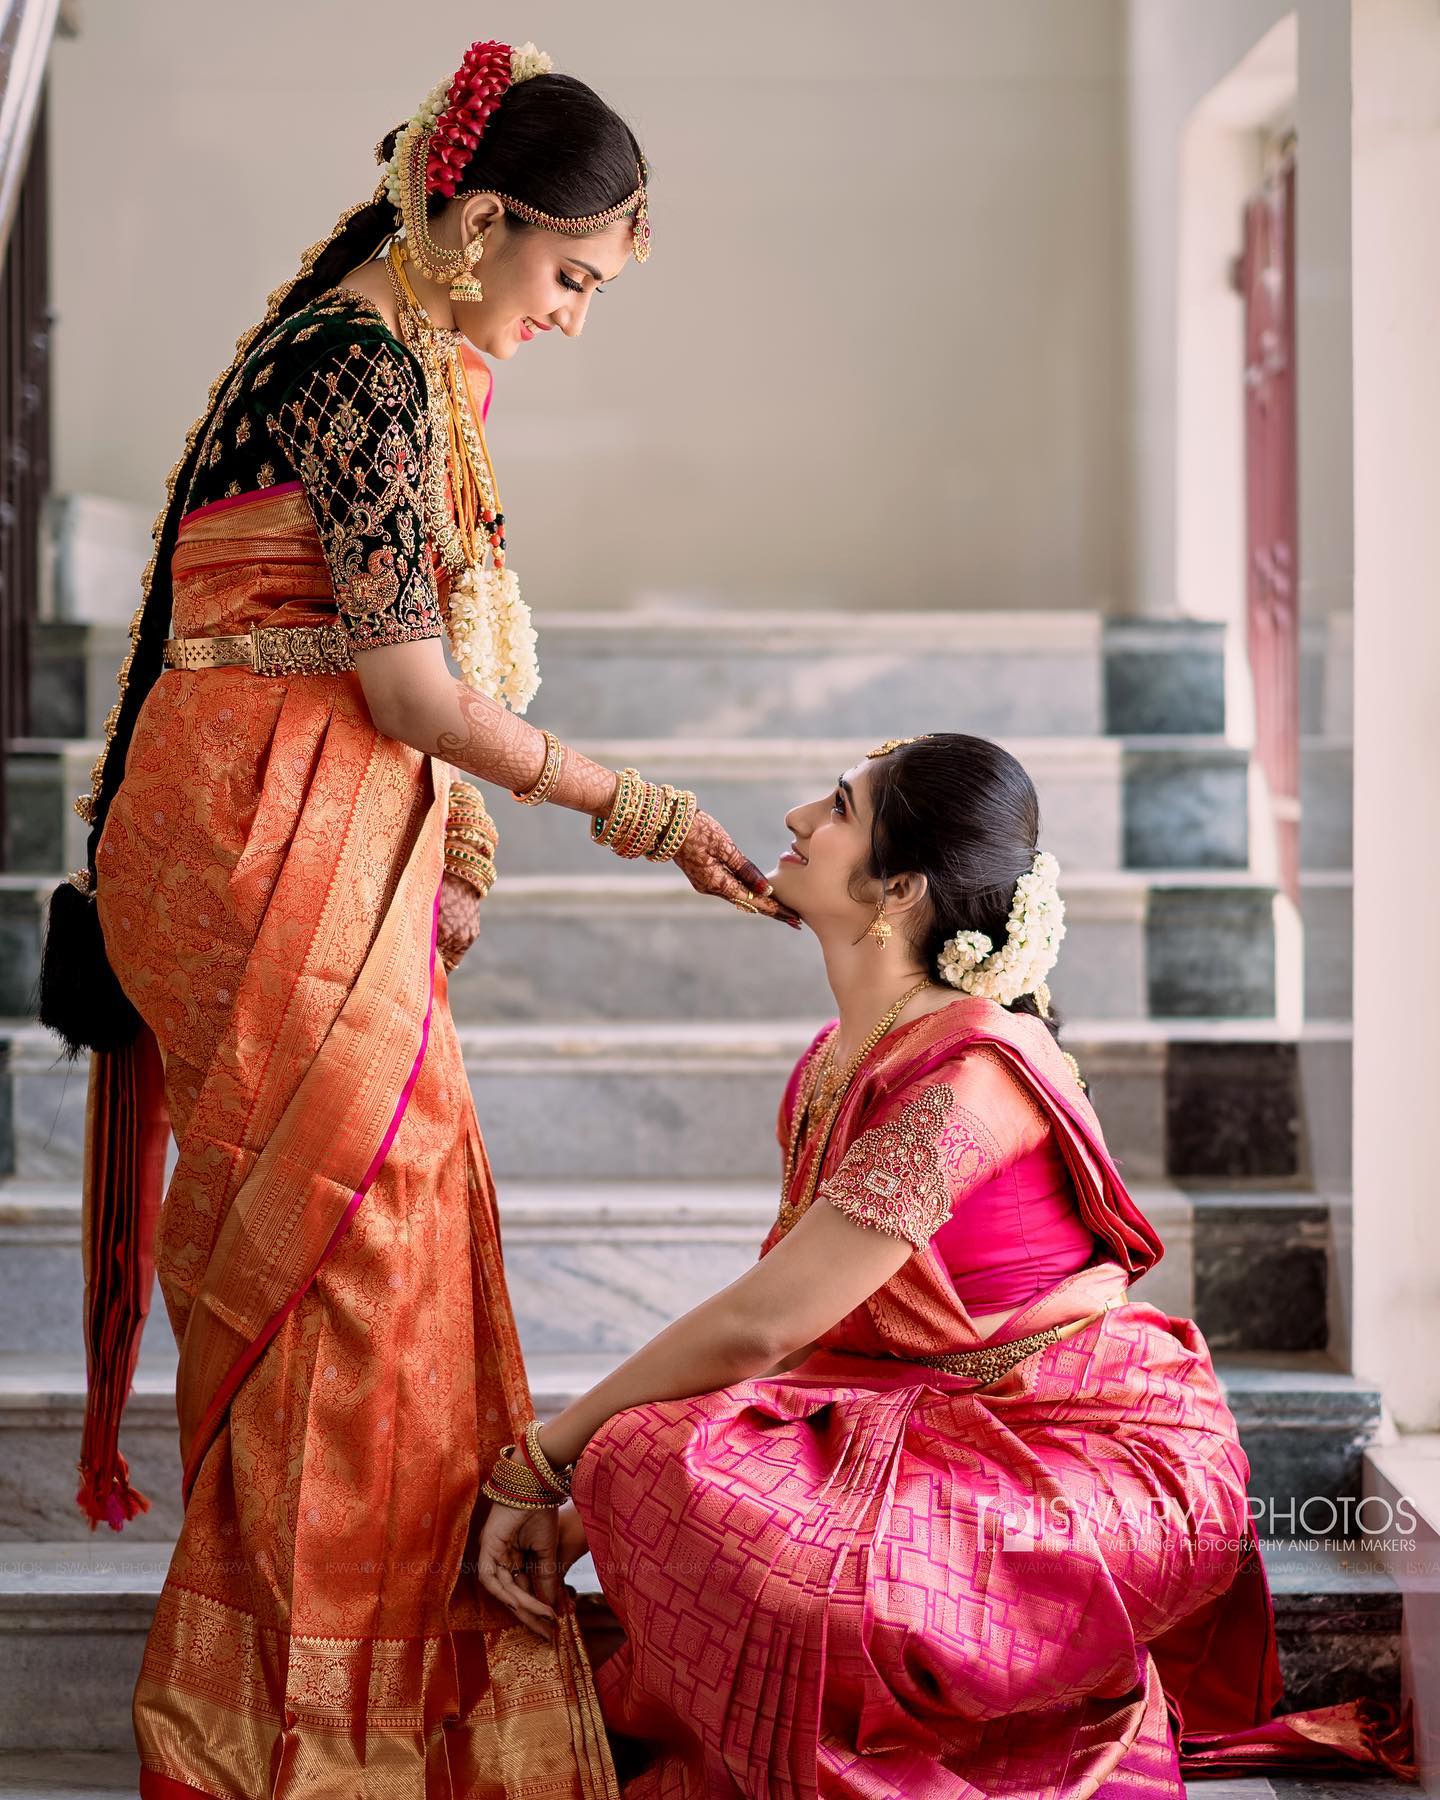 Orange South Indian wedding saree - south Indian wedding saree with price - south Indian wedding sarees online shopping